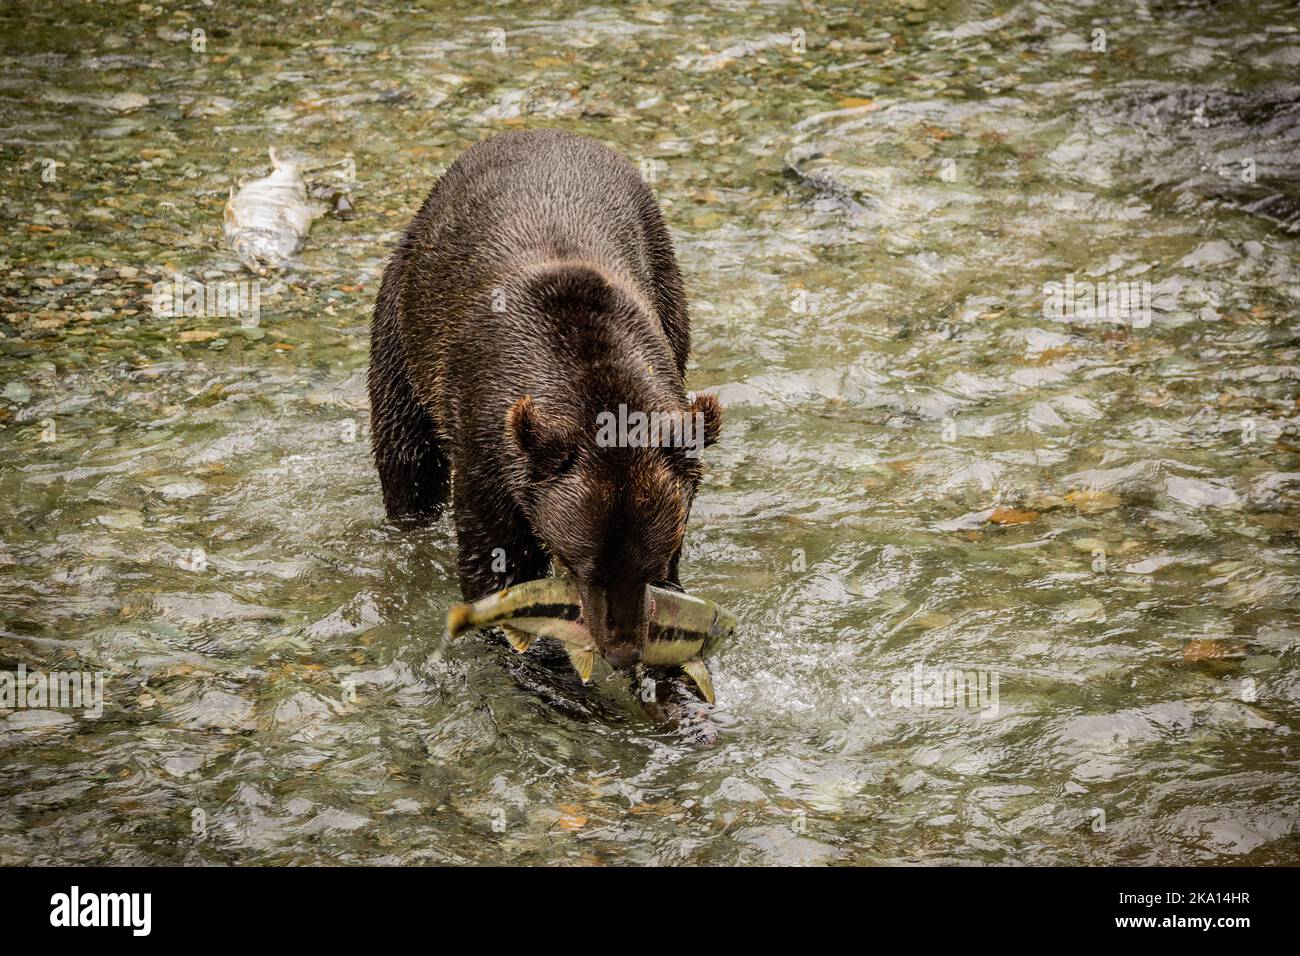 A black bear catching a salmon in Alaska river Stock Photo